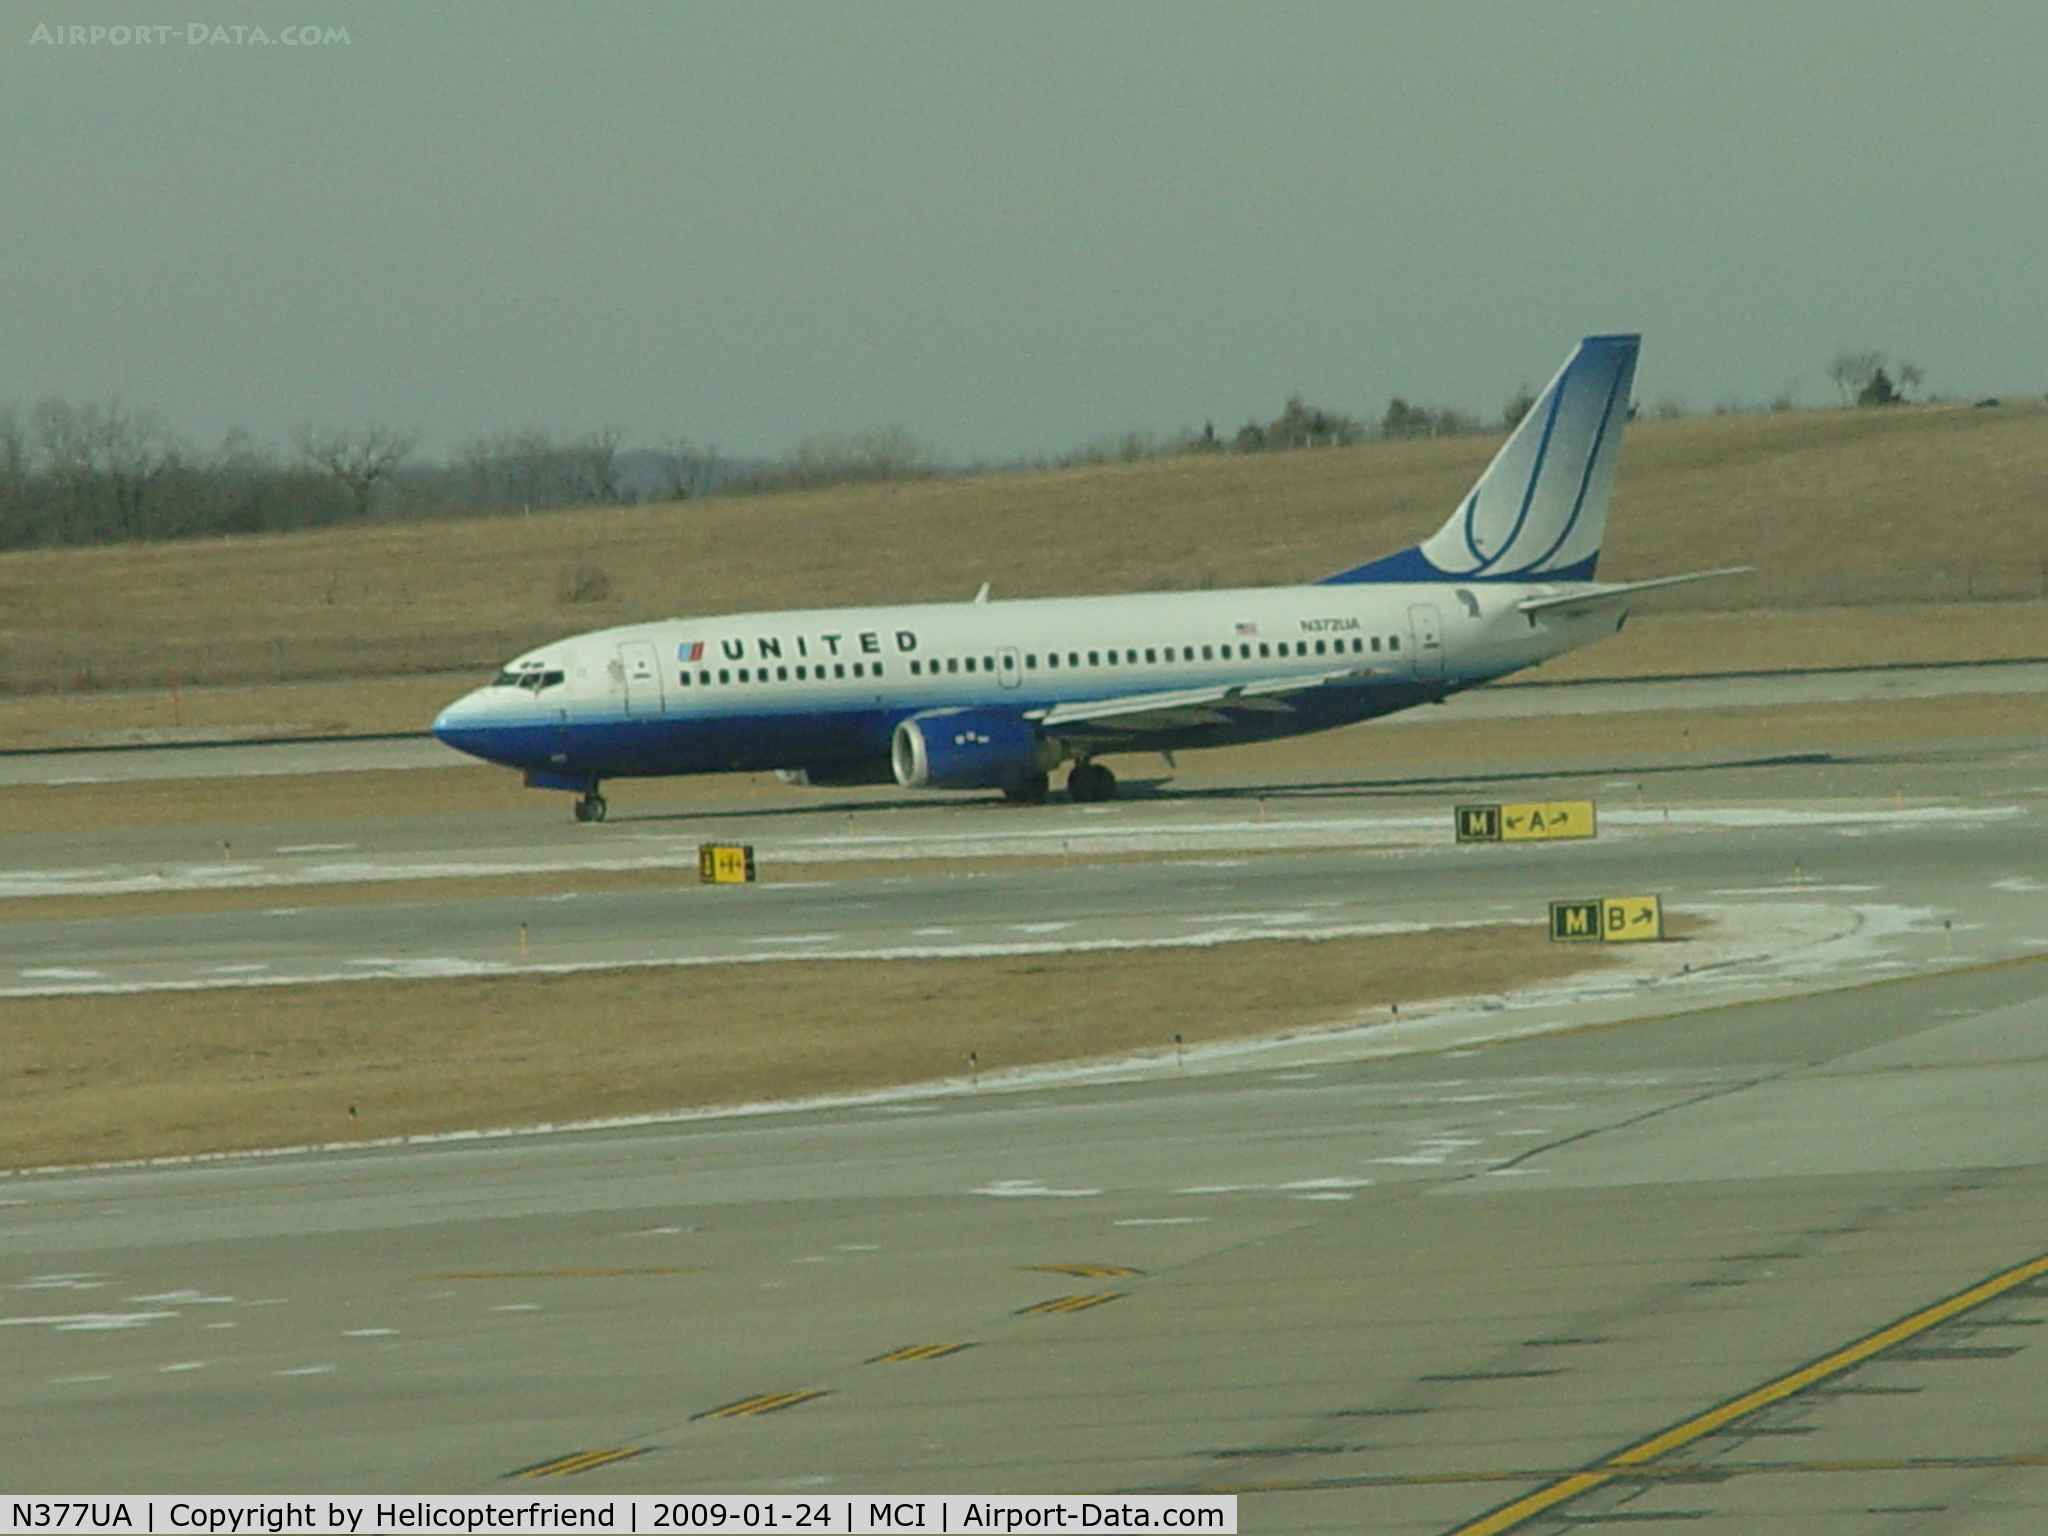 N377UA, 1990 Boeing 737-322 C/N 24642, Taxiing to runway for take off